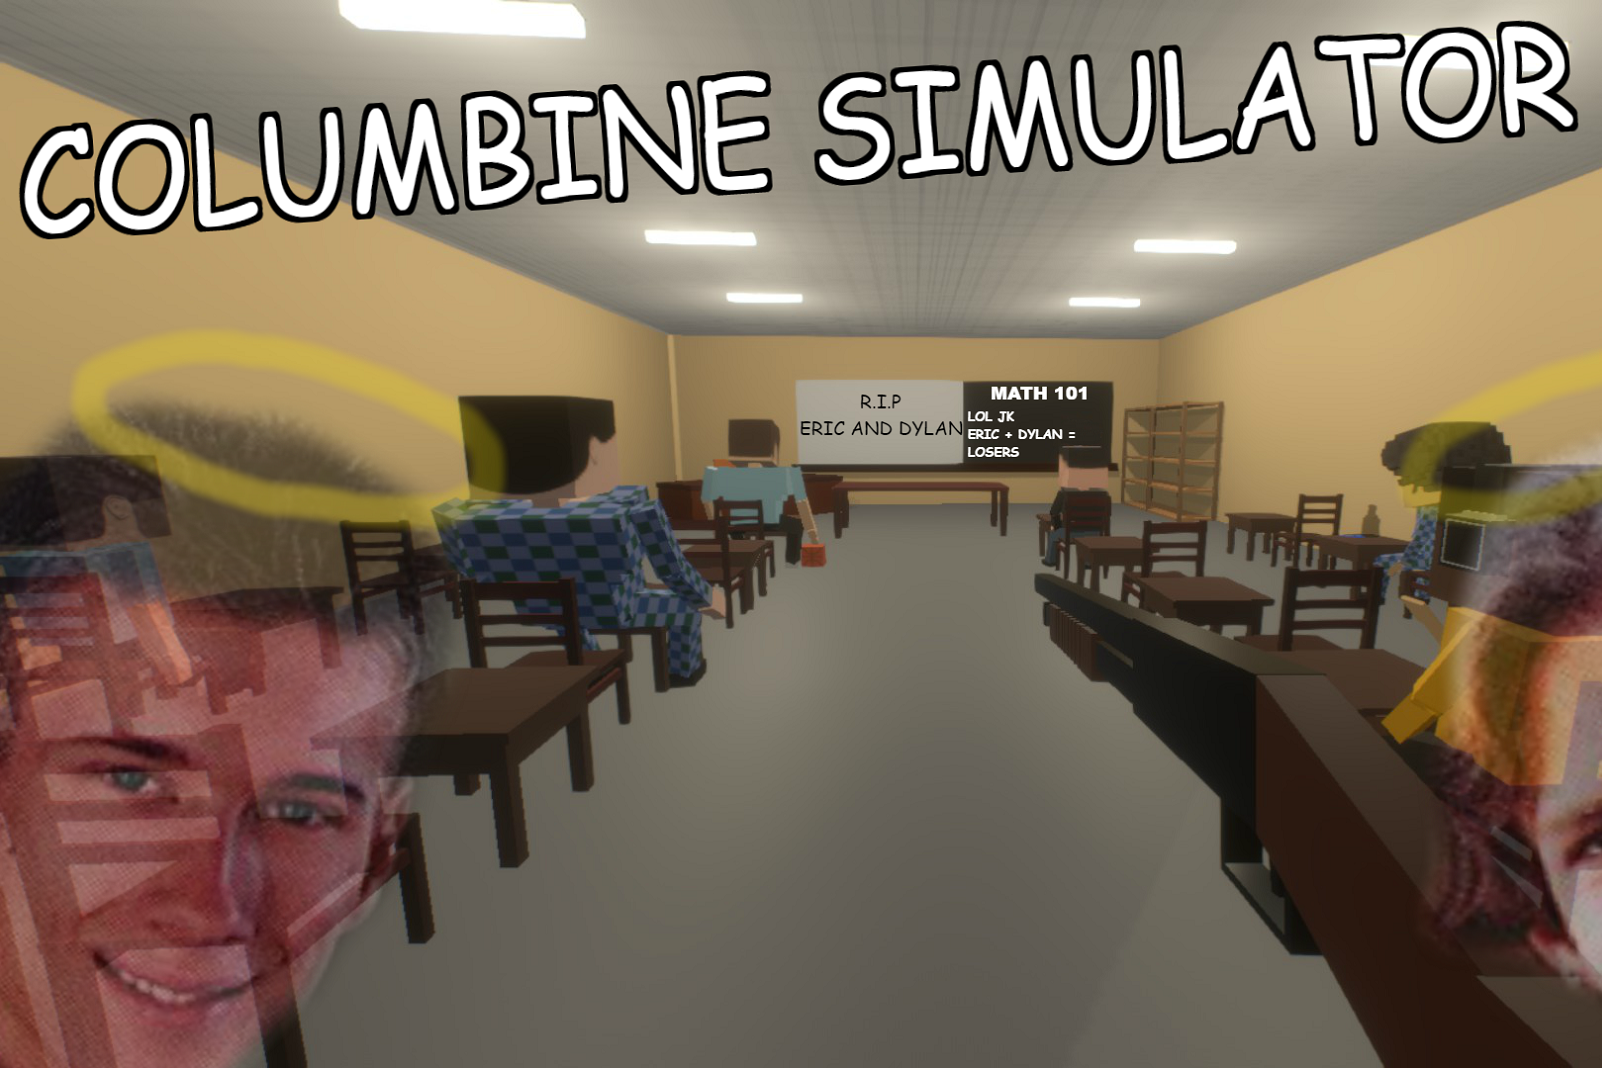 A screenshot from the "Columbine Simulator" on Steam.